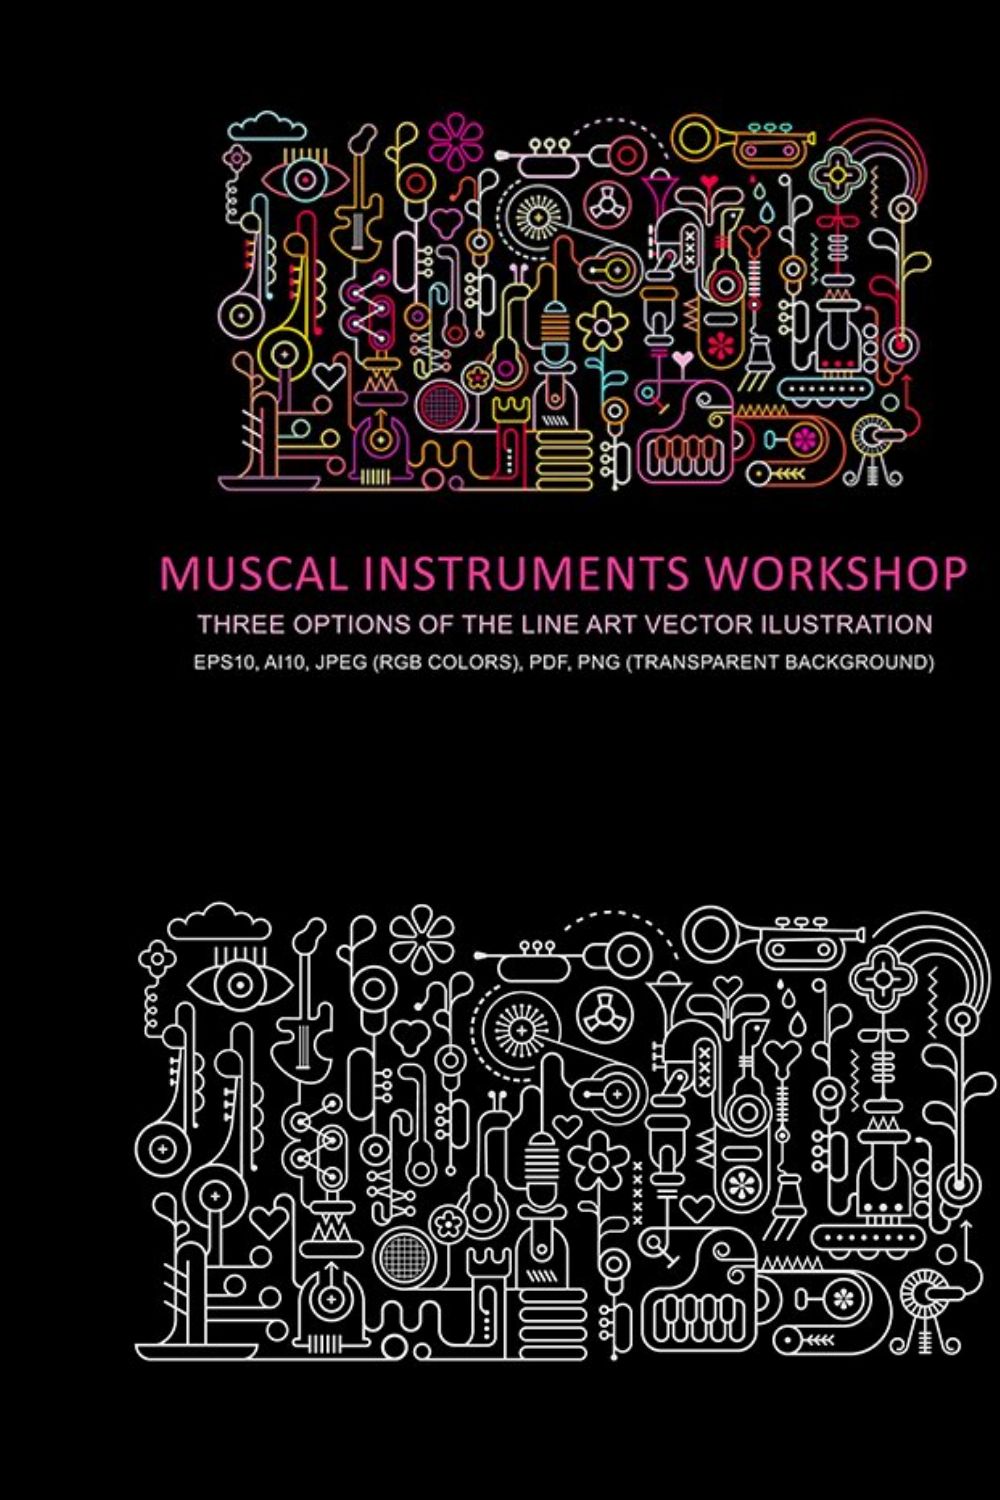 Musical Instruments Workshop pinterest preview image.